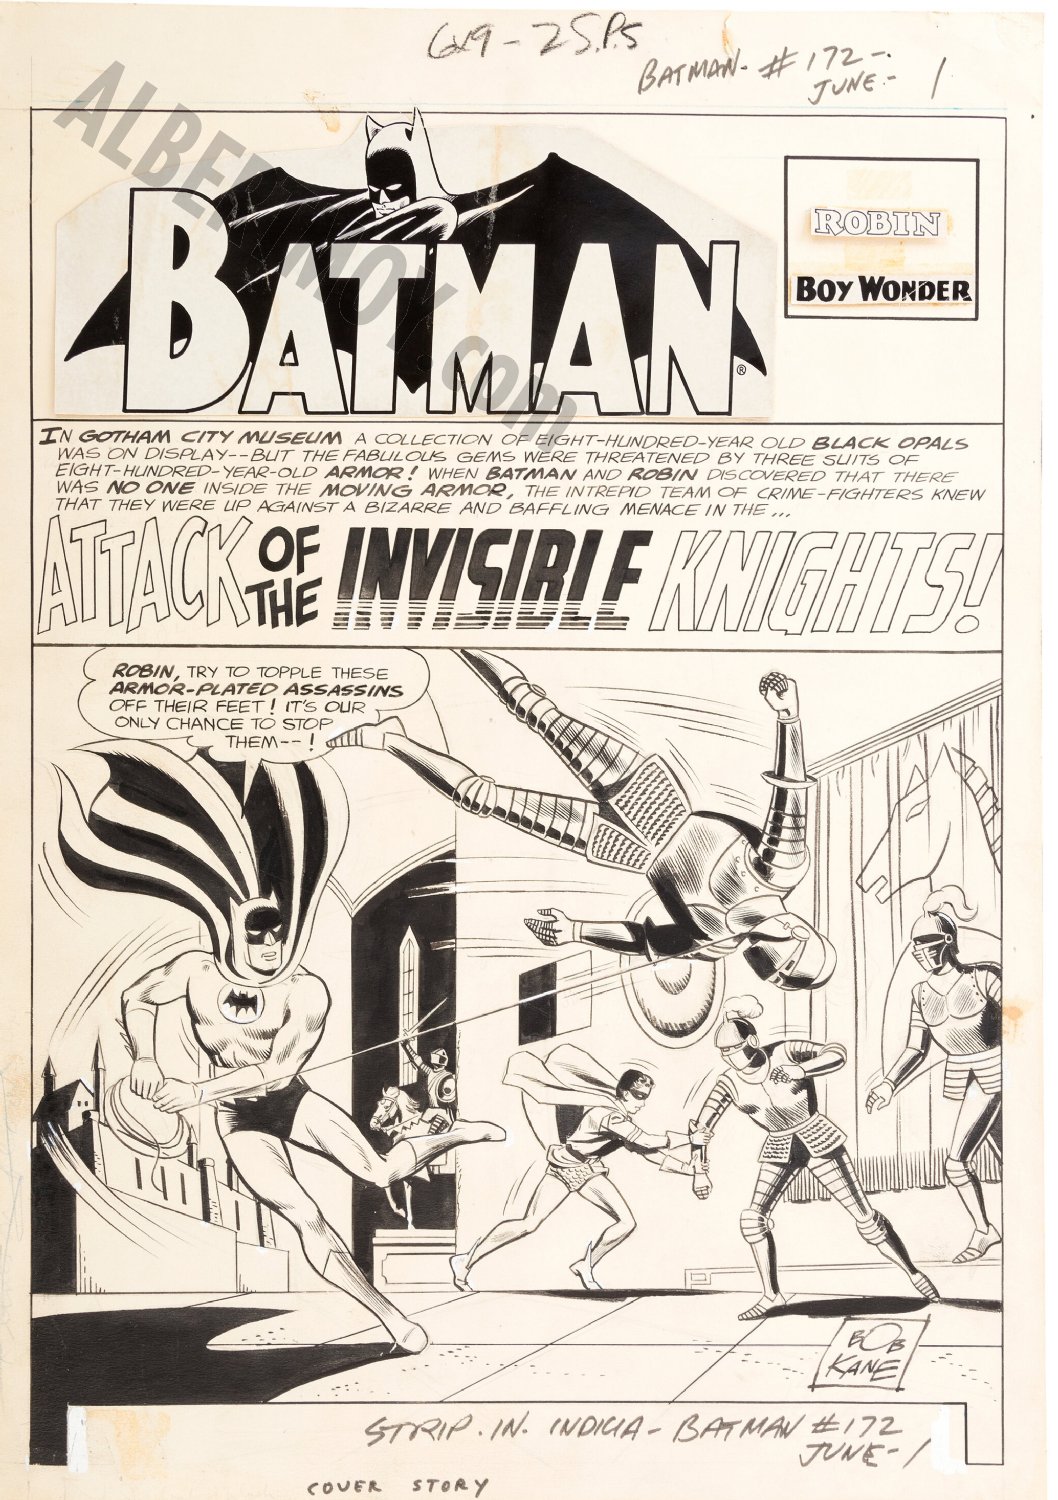 Albert Moy : Original Comic Art - Batman by Shelly Moldoff